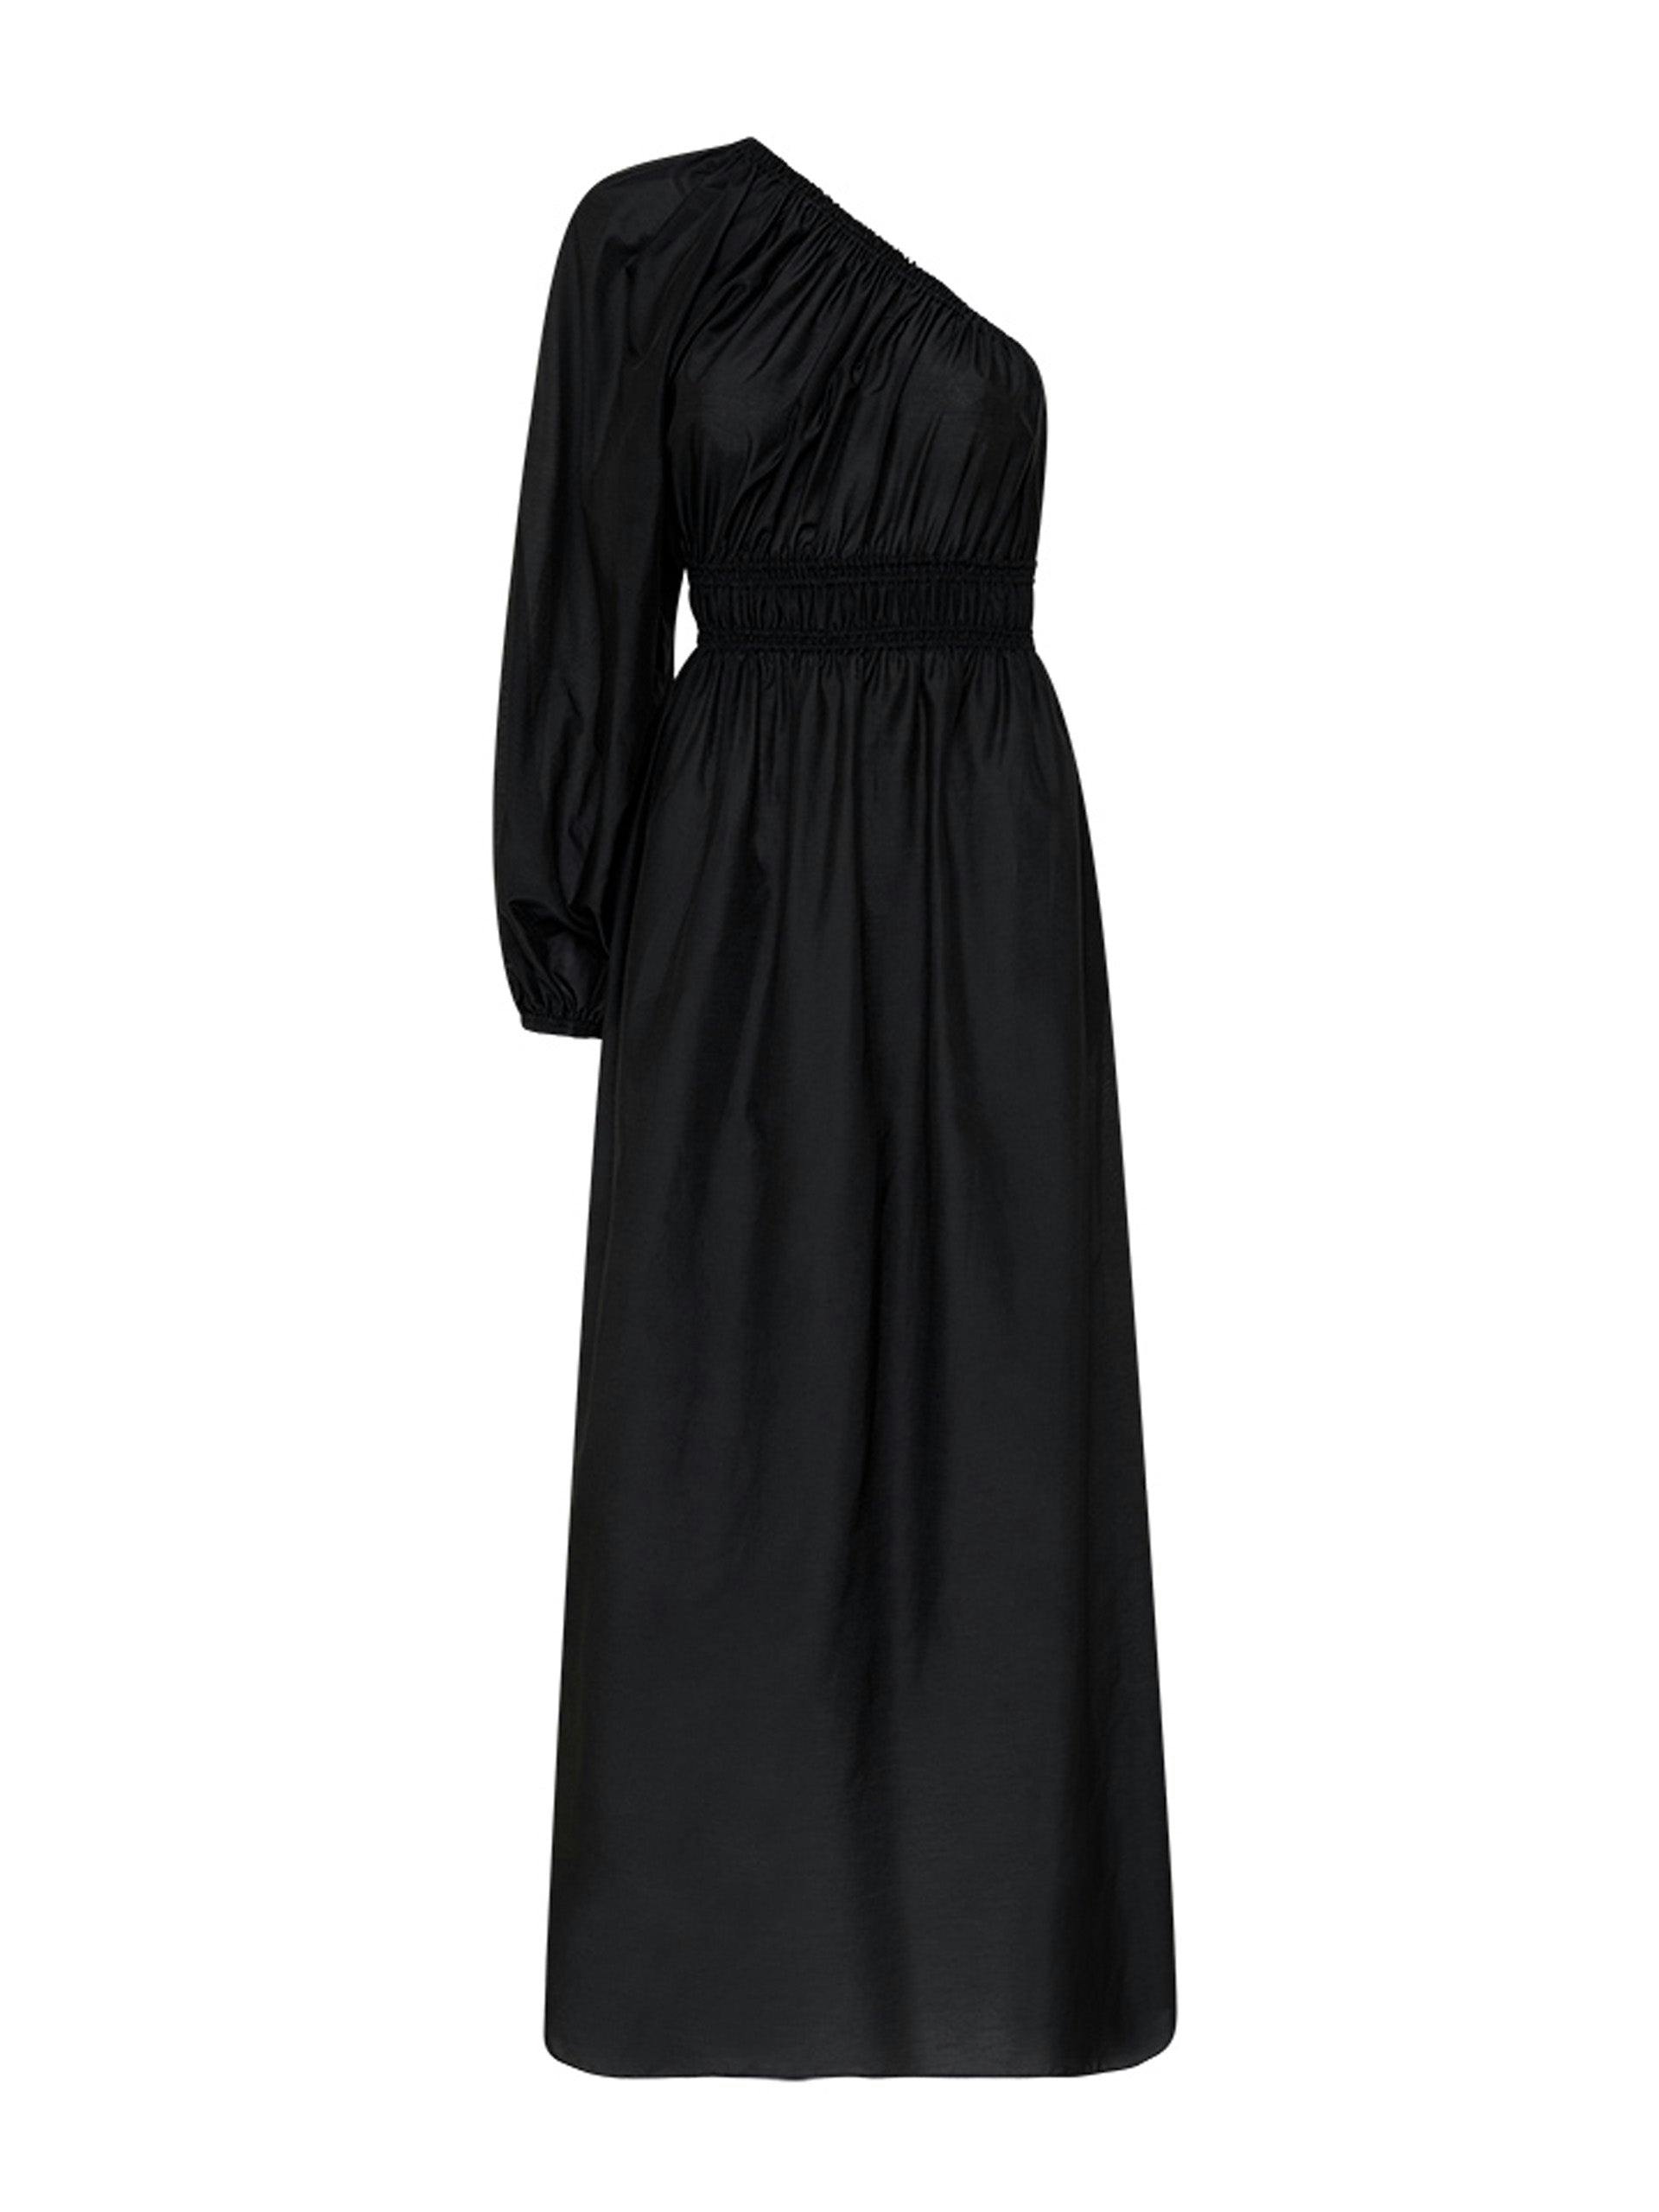 Black single sleeve maxi dress